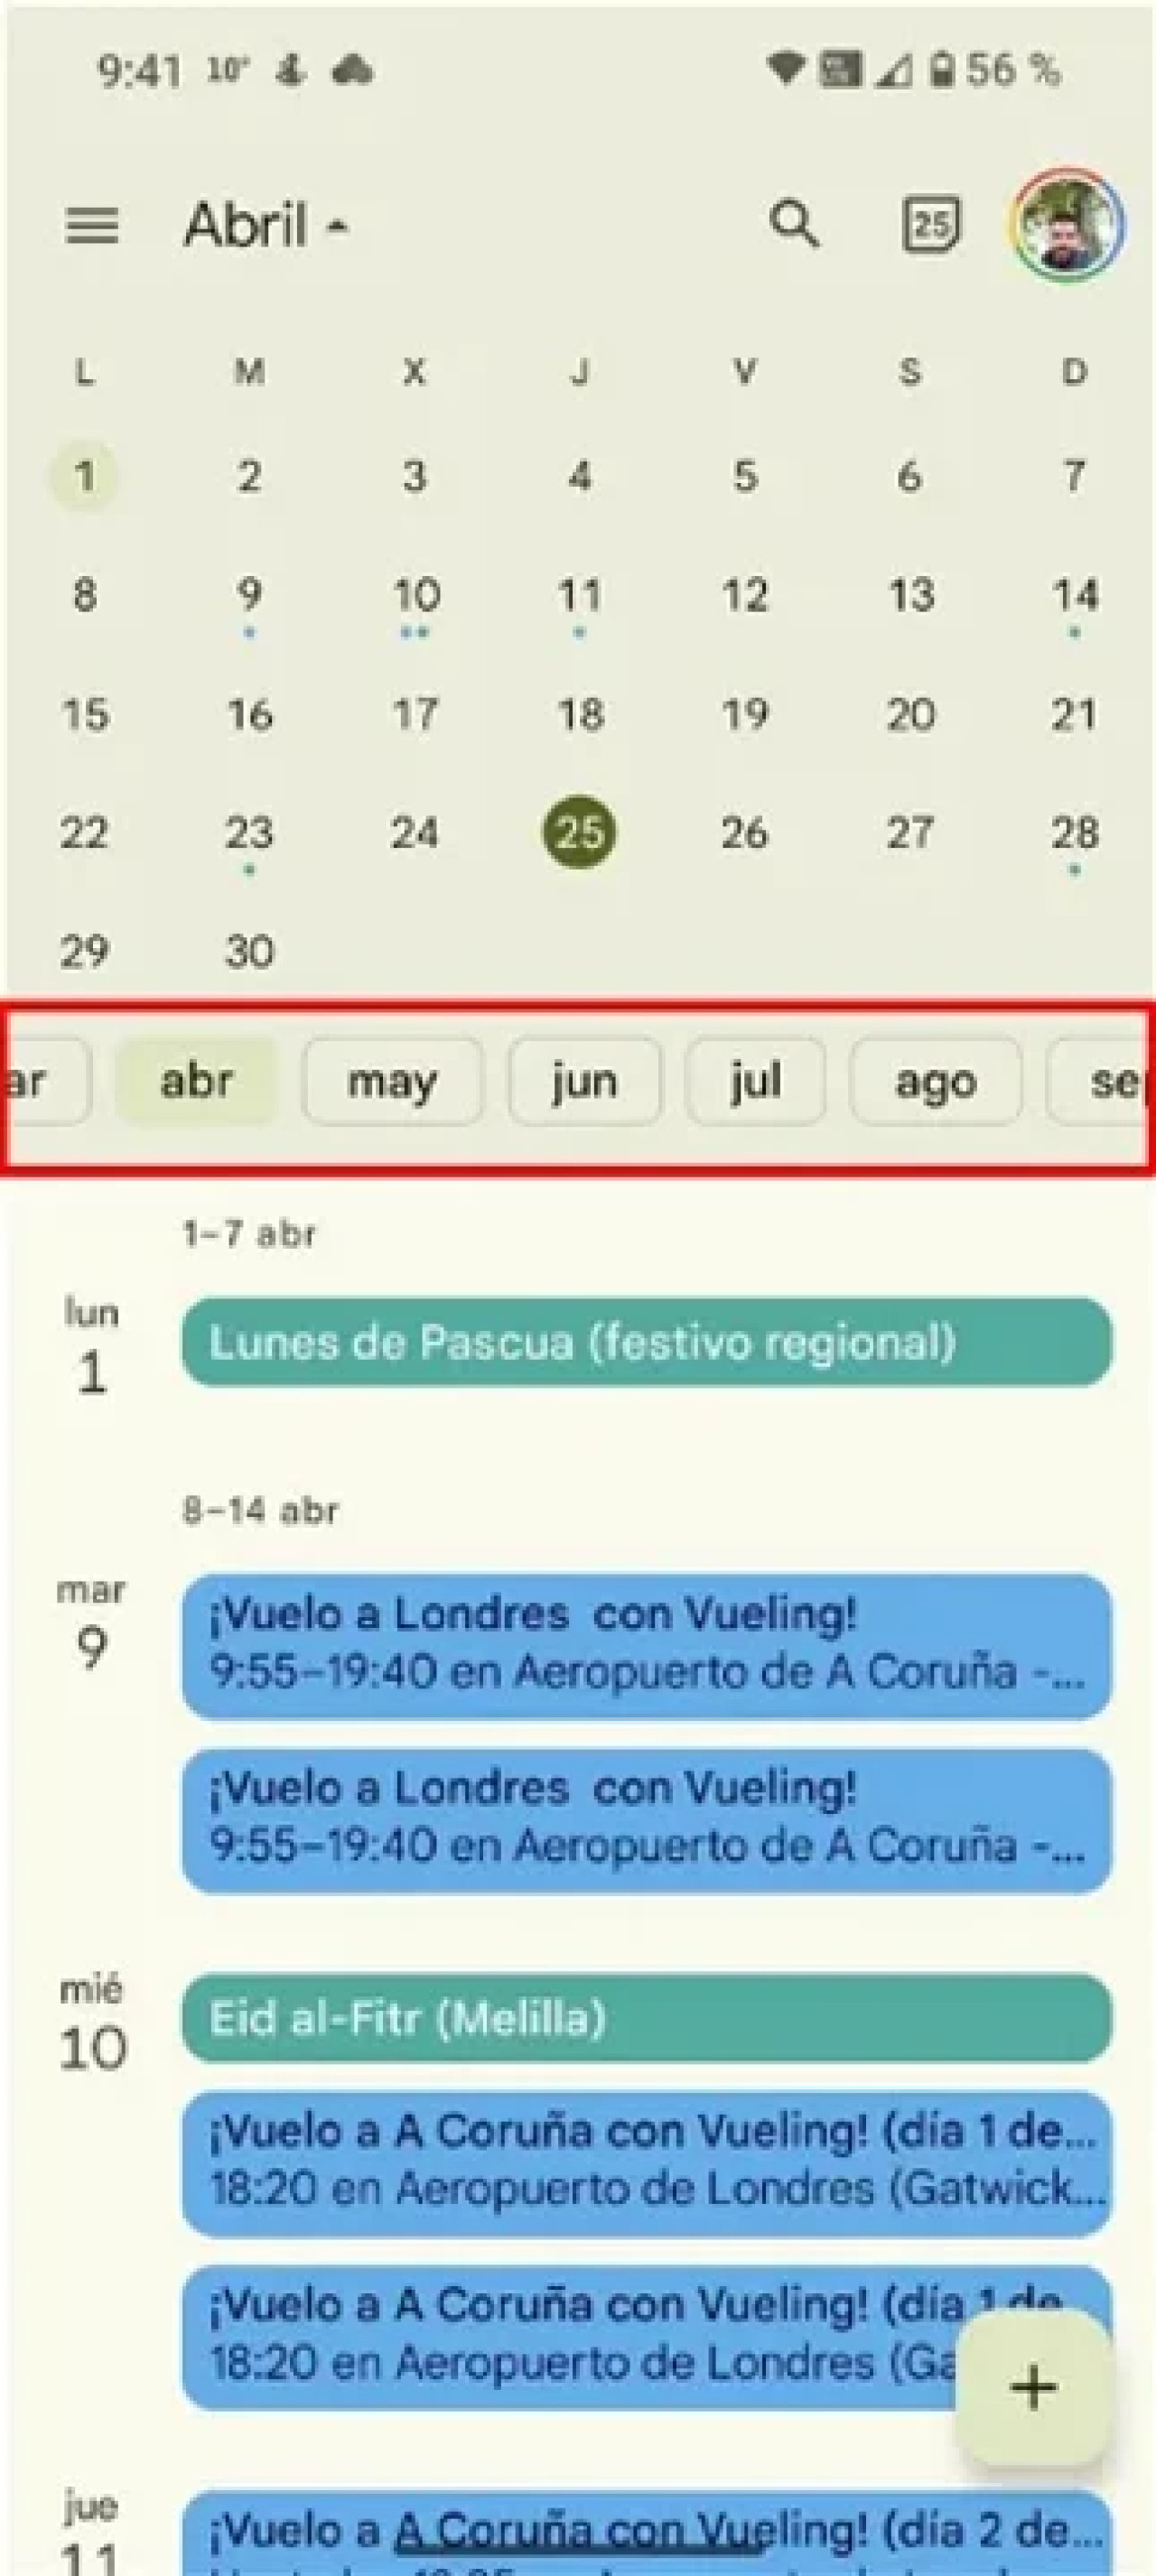 Google Calendar permite crear eventos. Foto: NA.